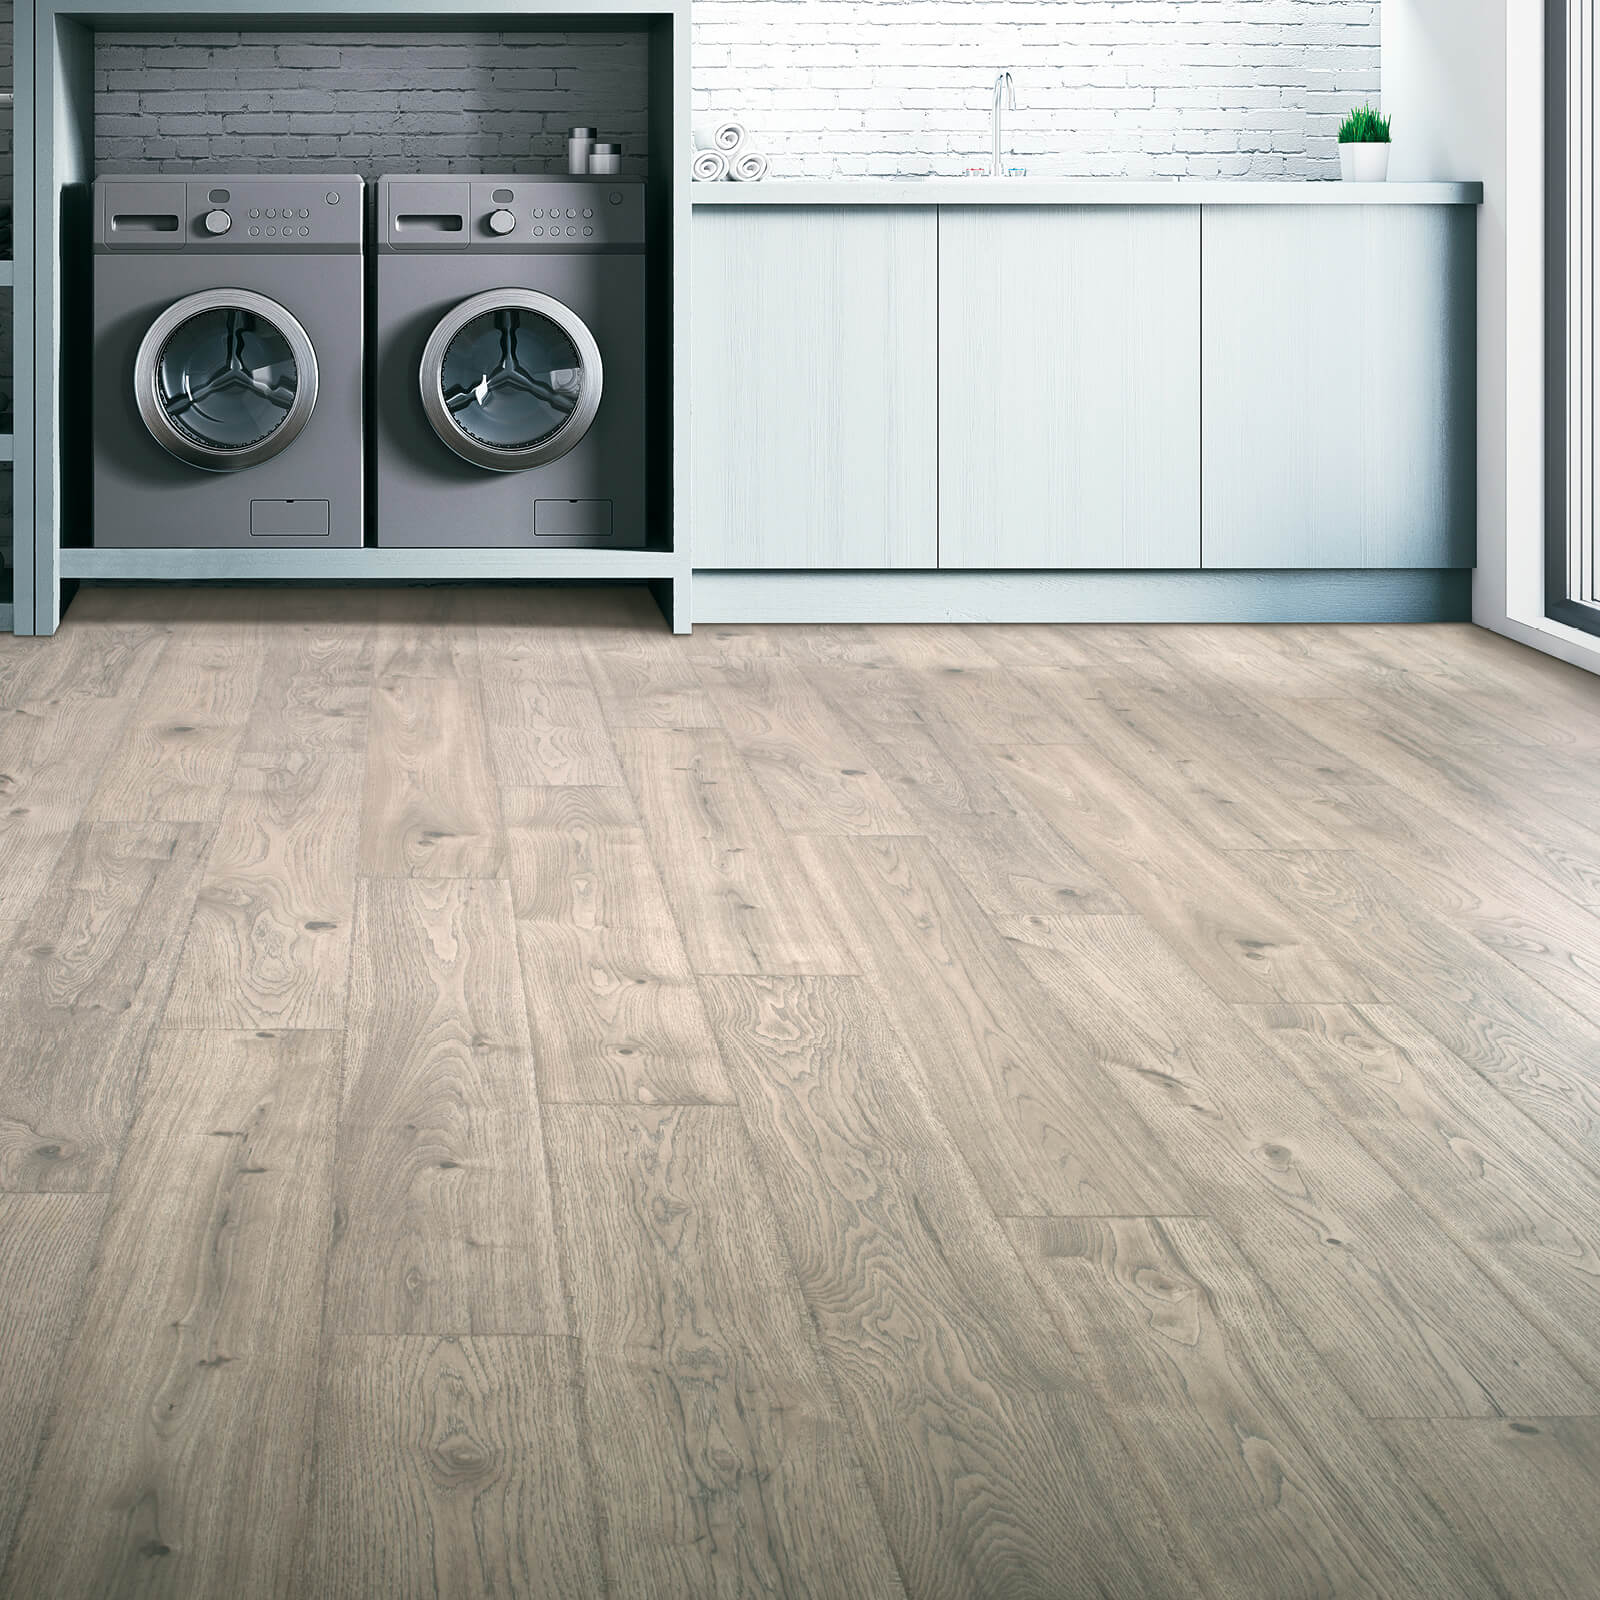 Laundry room Laminate flooring | CarpetsPlus COLORTILE & Wholesale Flooring